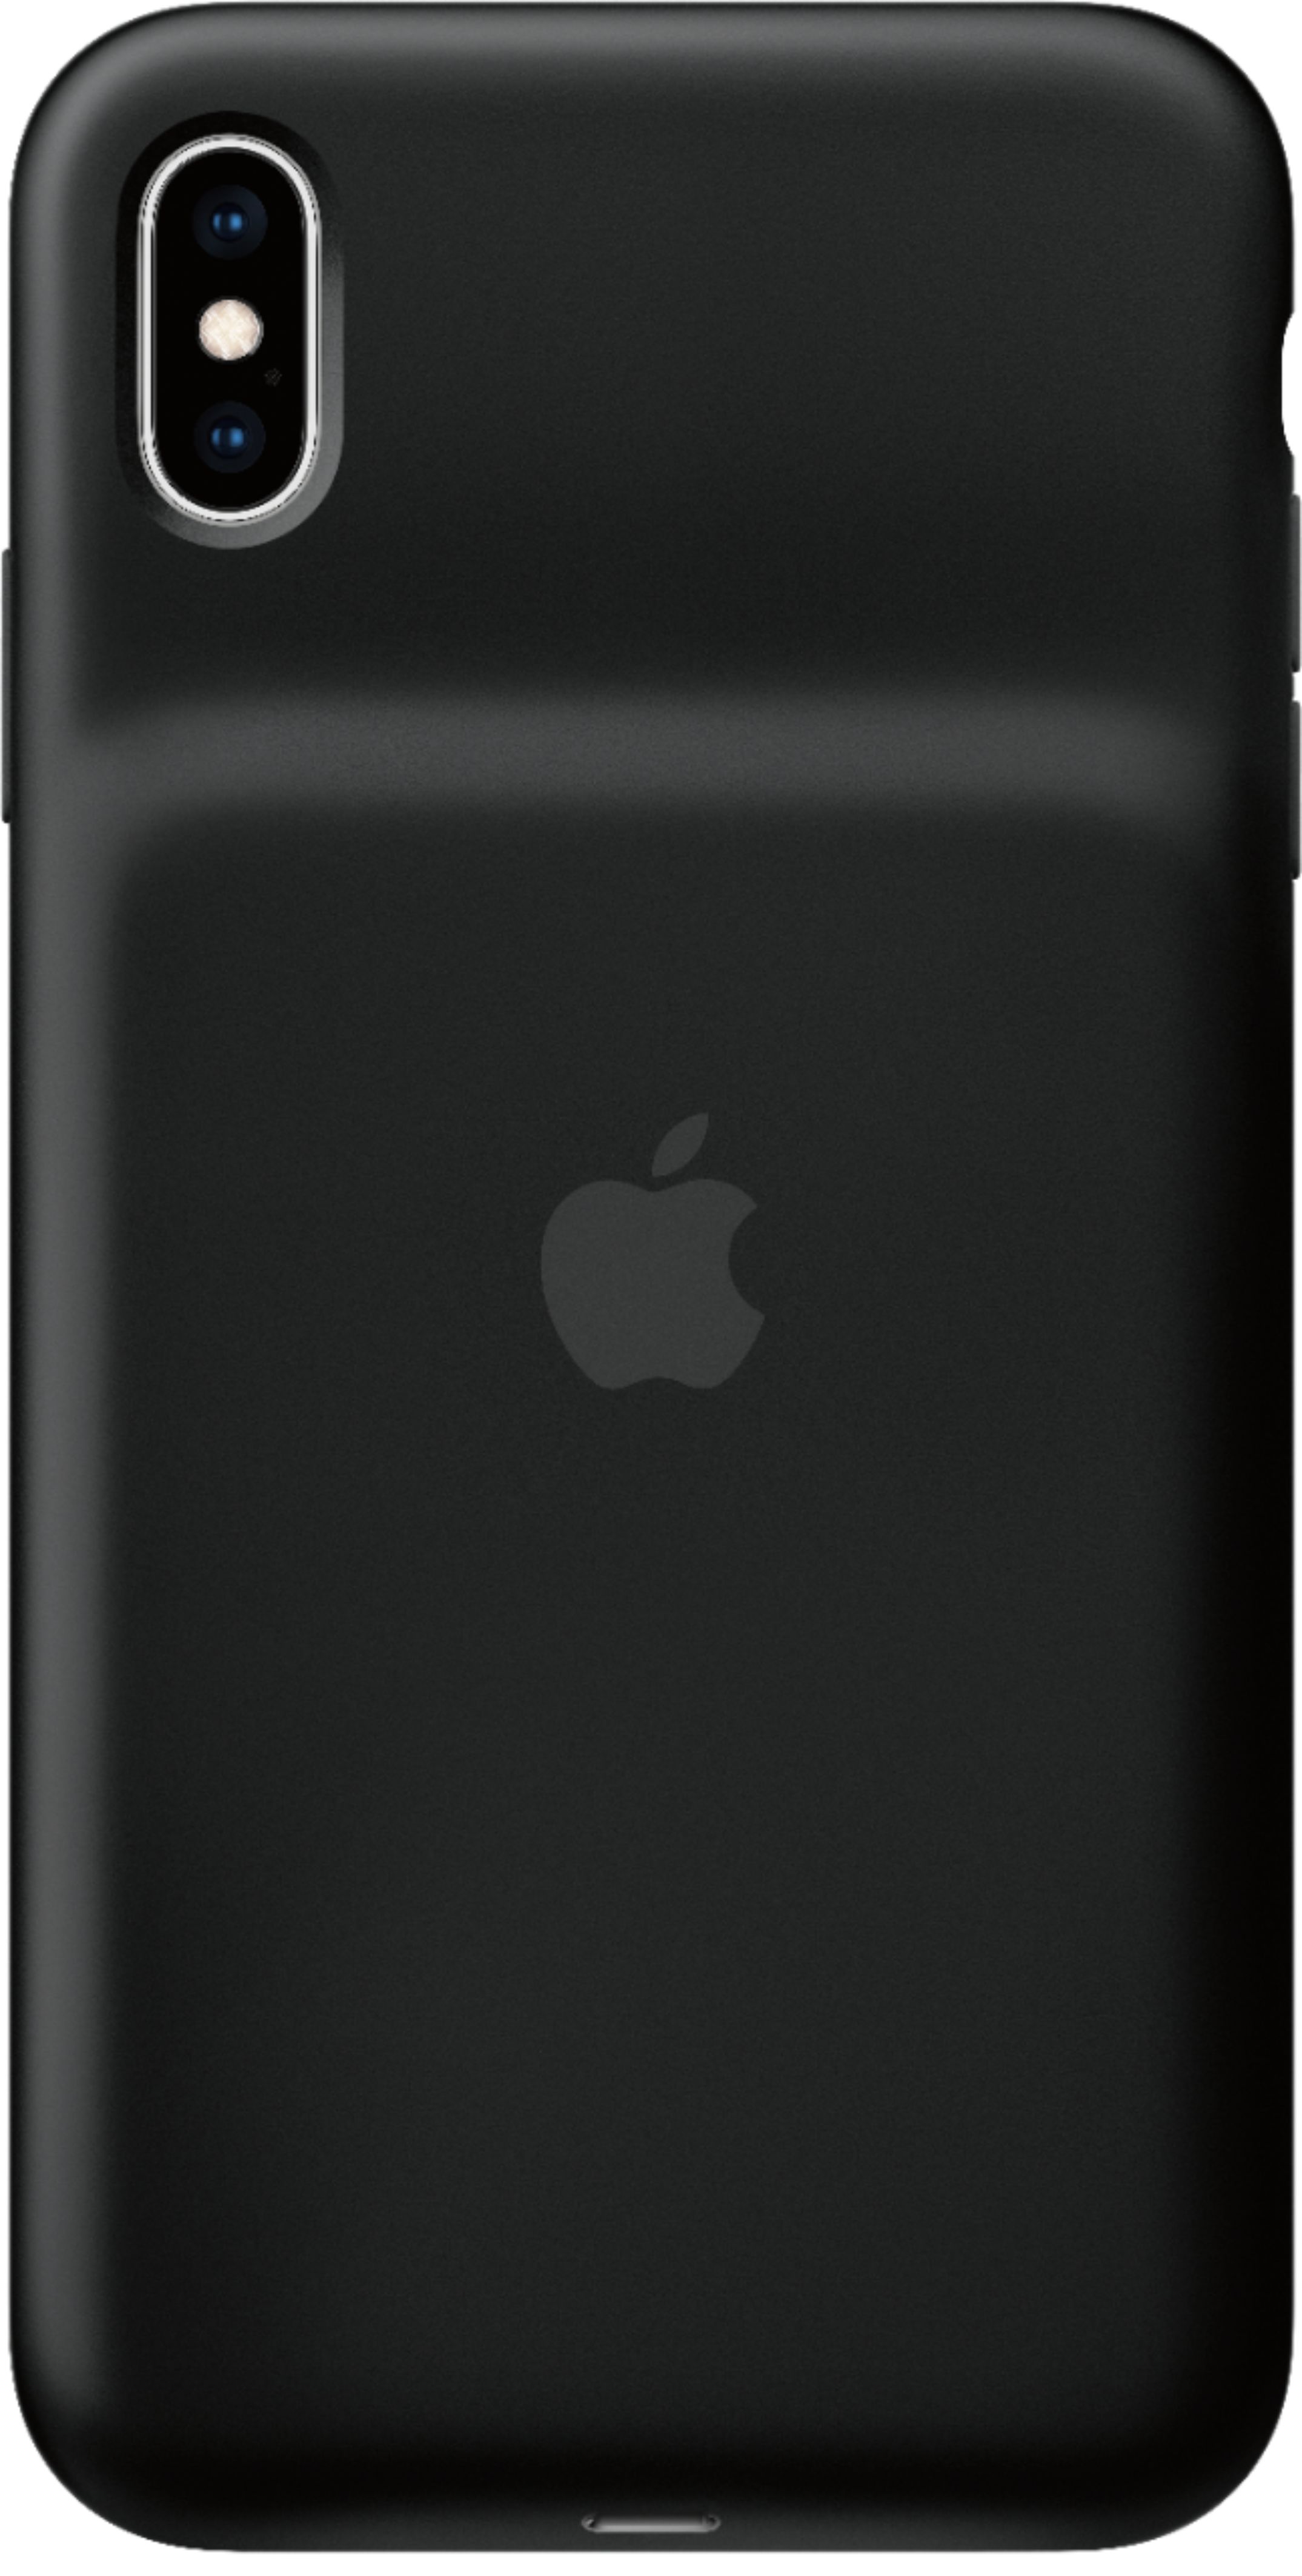 Apple iPhone XS Max Smart Battery Case Black  - Best Buy